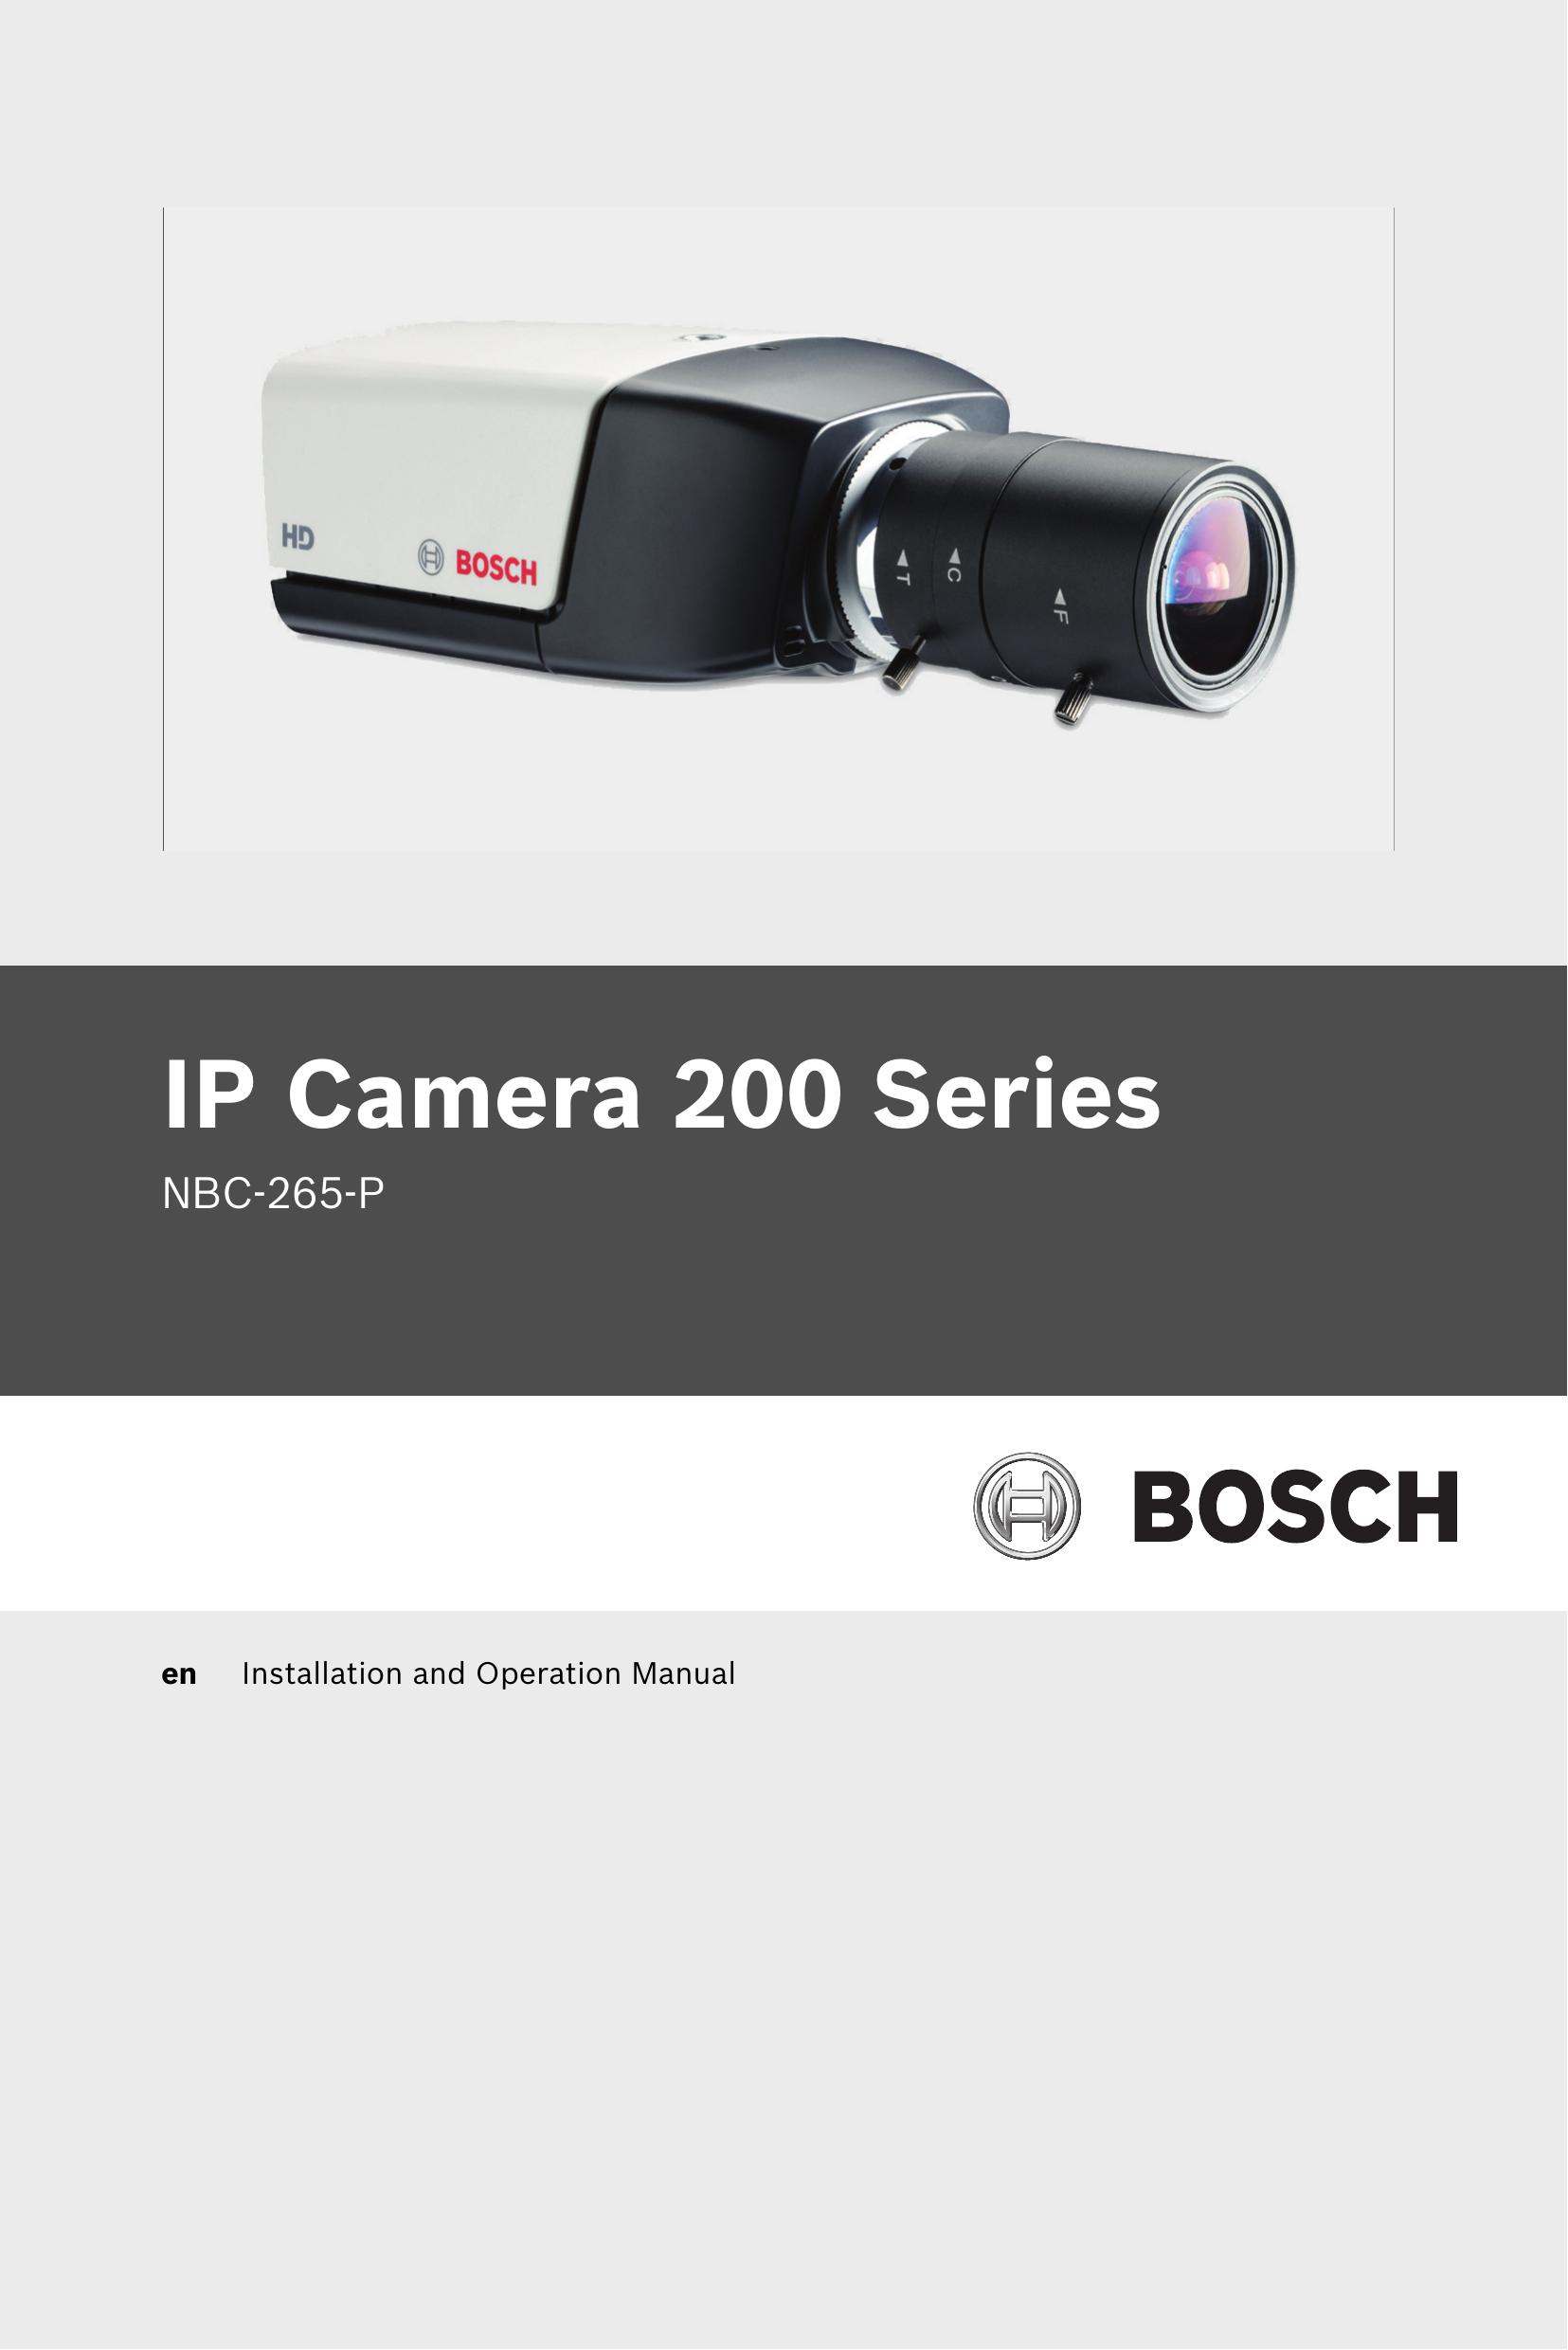 Bosch Appliances NBC-265-P Security Camera User Manual